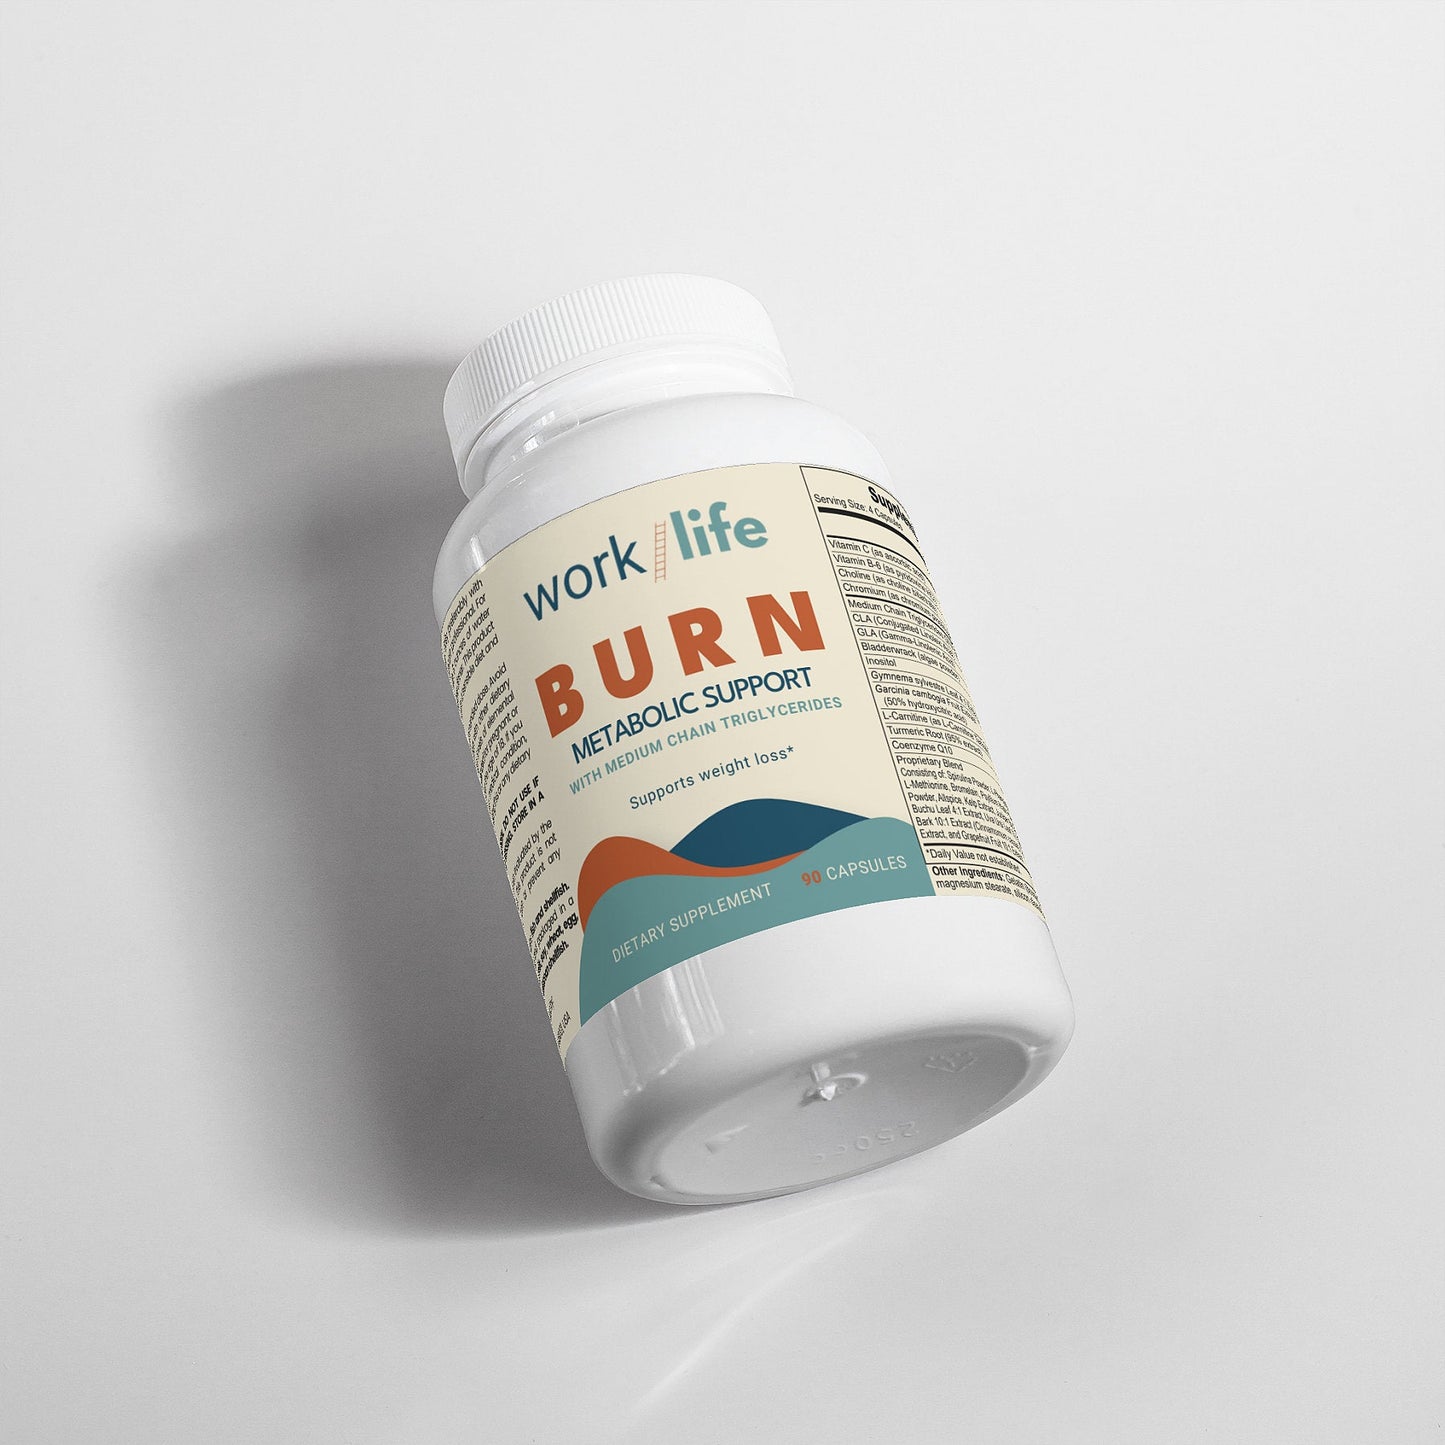 Burn - Metabolic Support - Work/Life Supplements